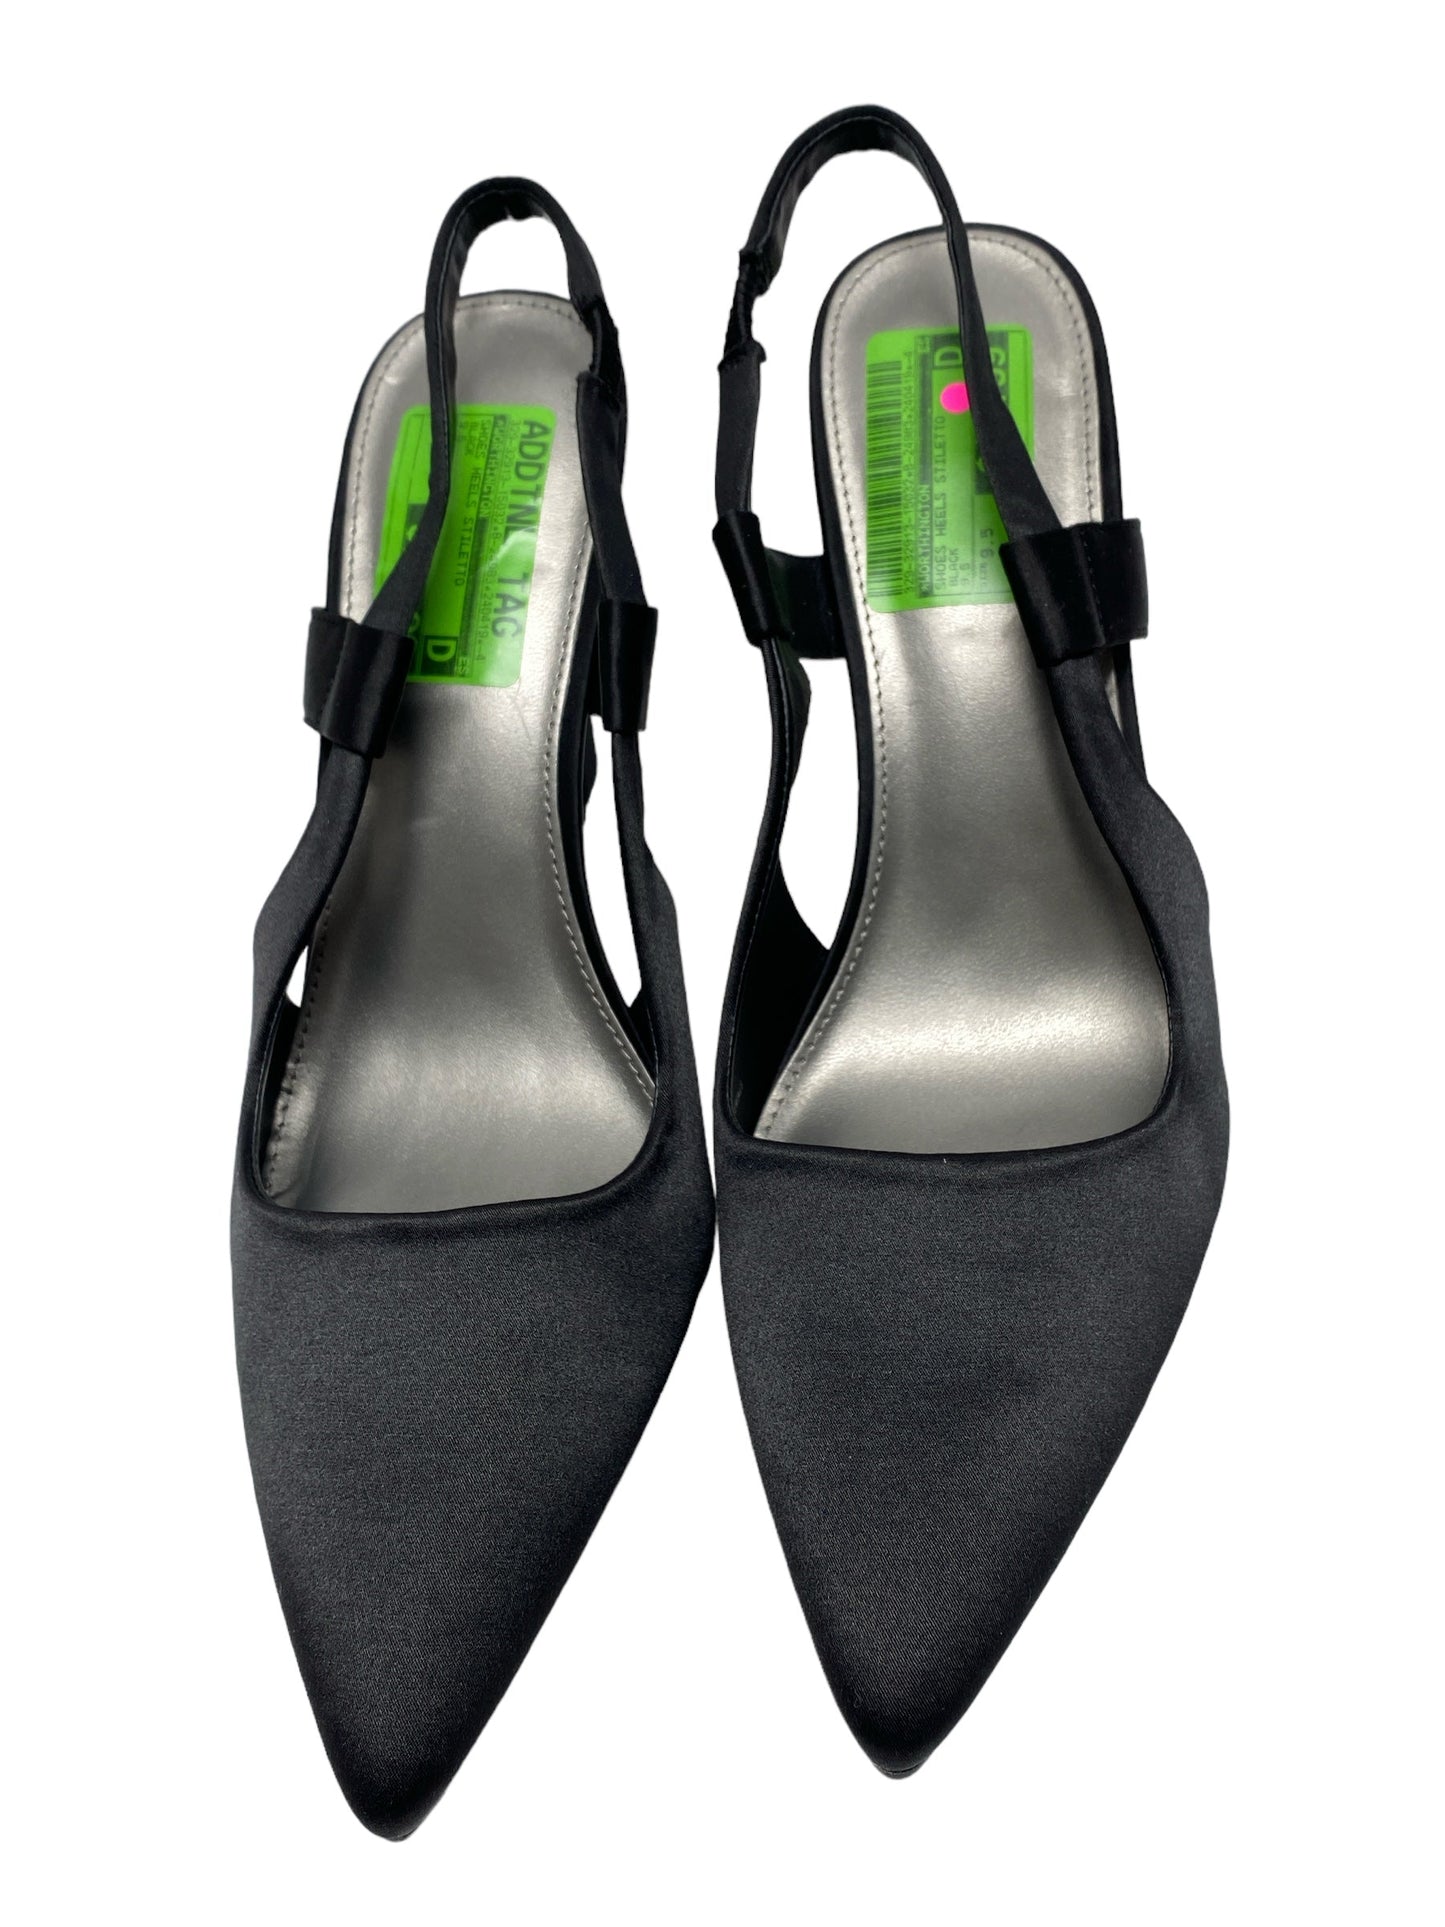 Shoes Heels Stiletto By Worthington  Size: 9.5